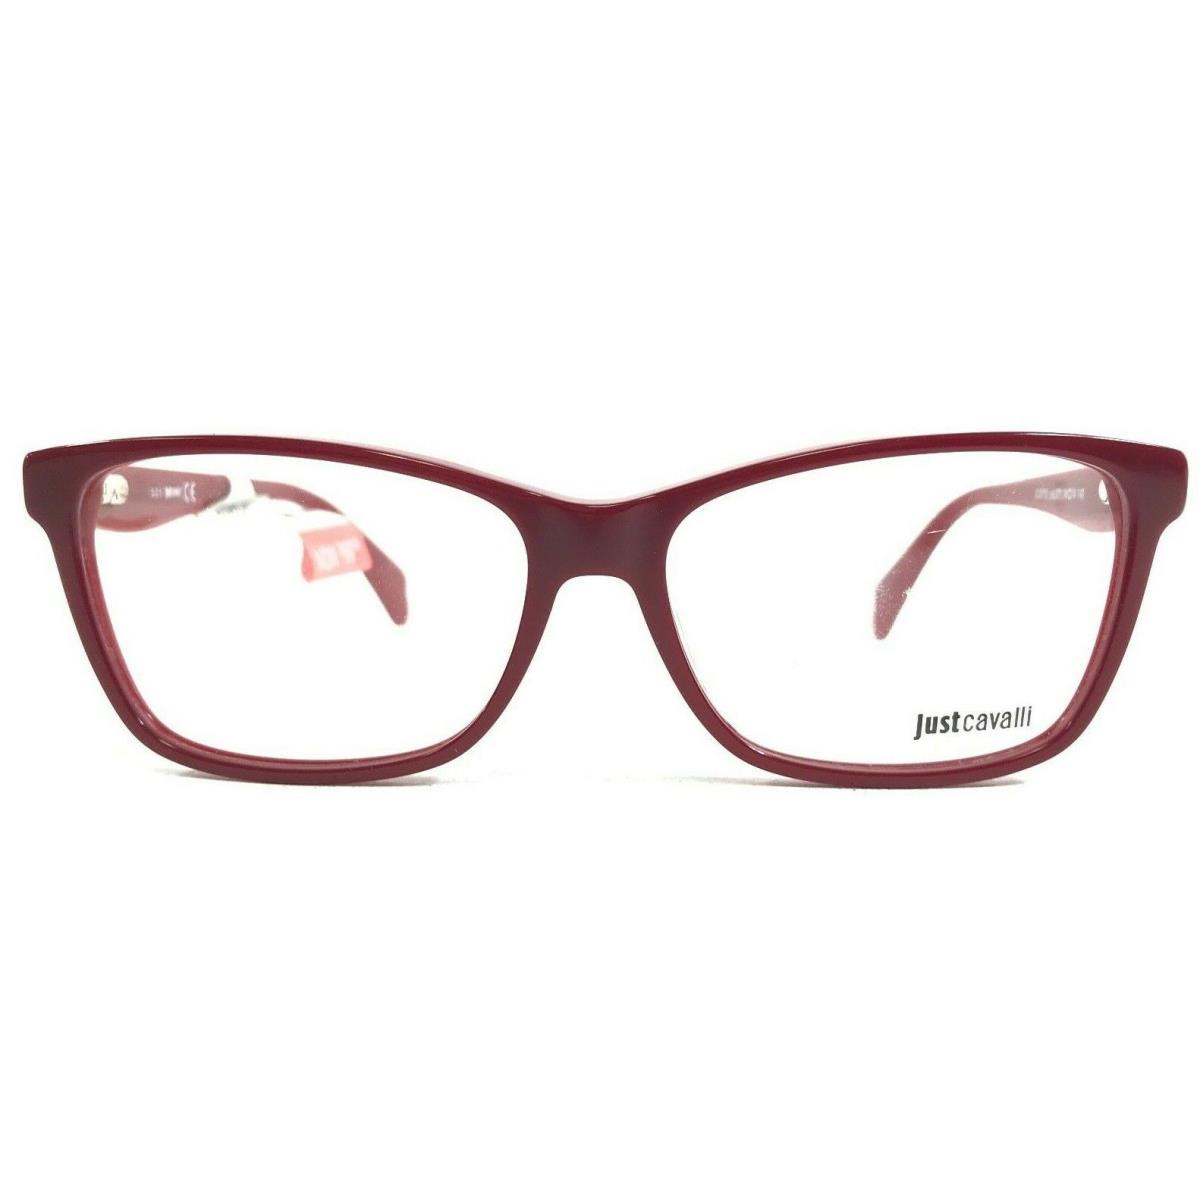 Just Cavalli JC0712 COL.071 Eyeglasses Frames Red Square Full Rim 54-14-140